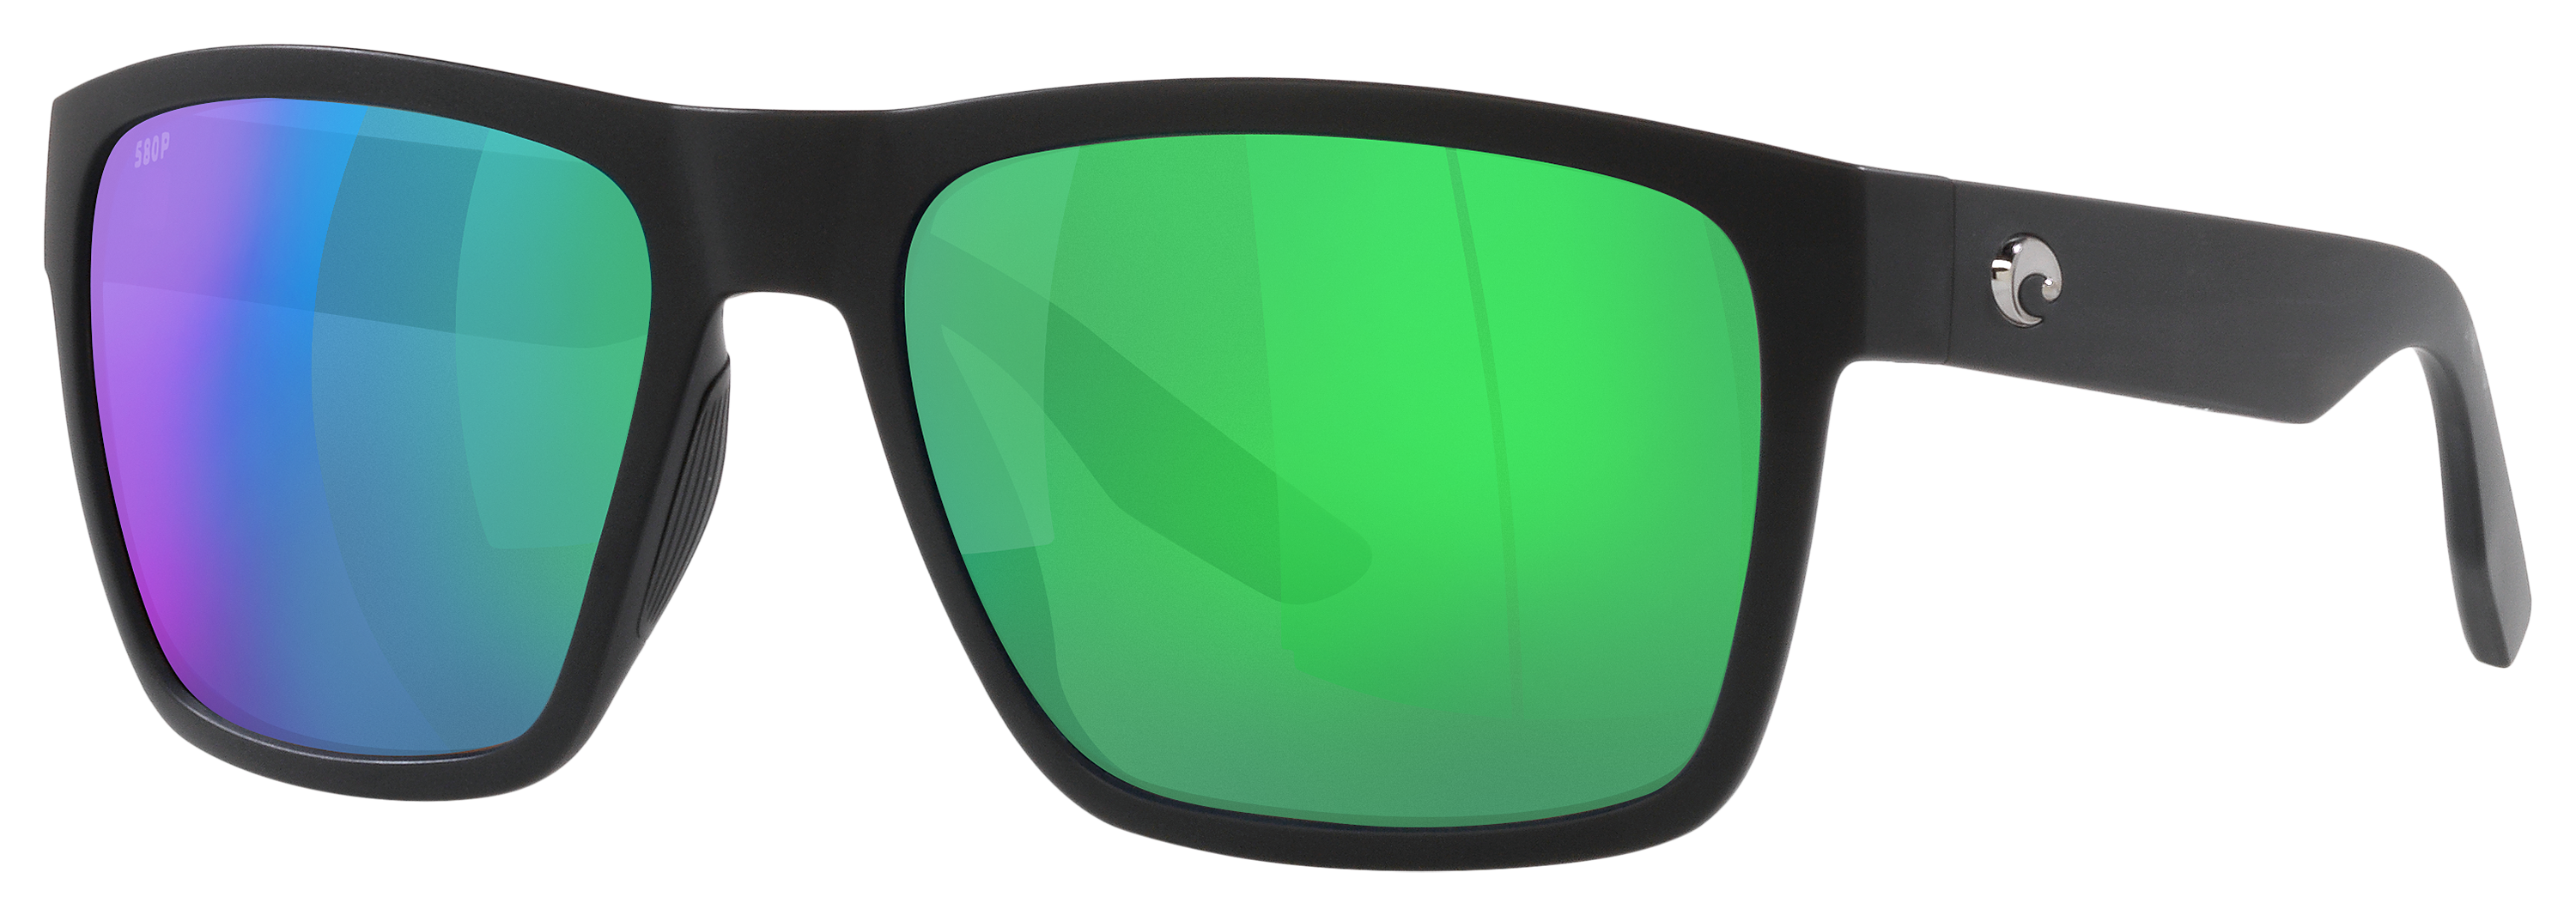 Costa Del Mar Paunch XL 580P Polarized Sunglasses - Matte Black/Green Mirror - XX-Large